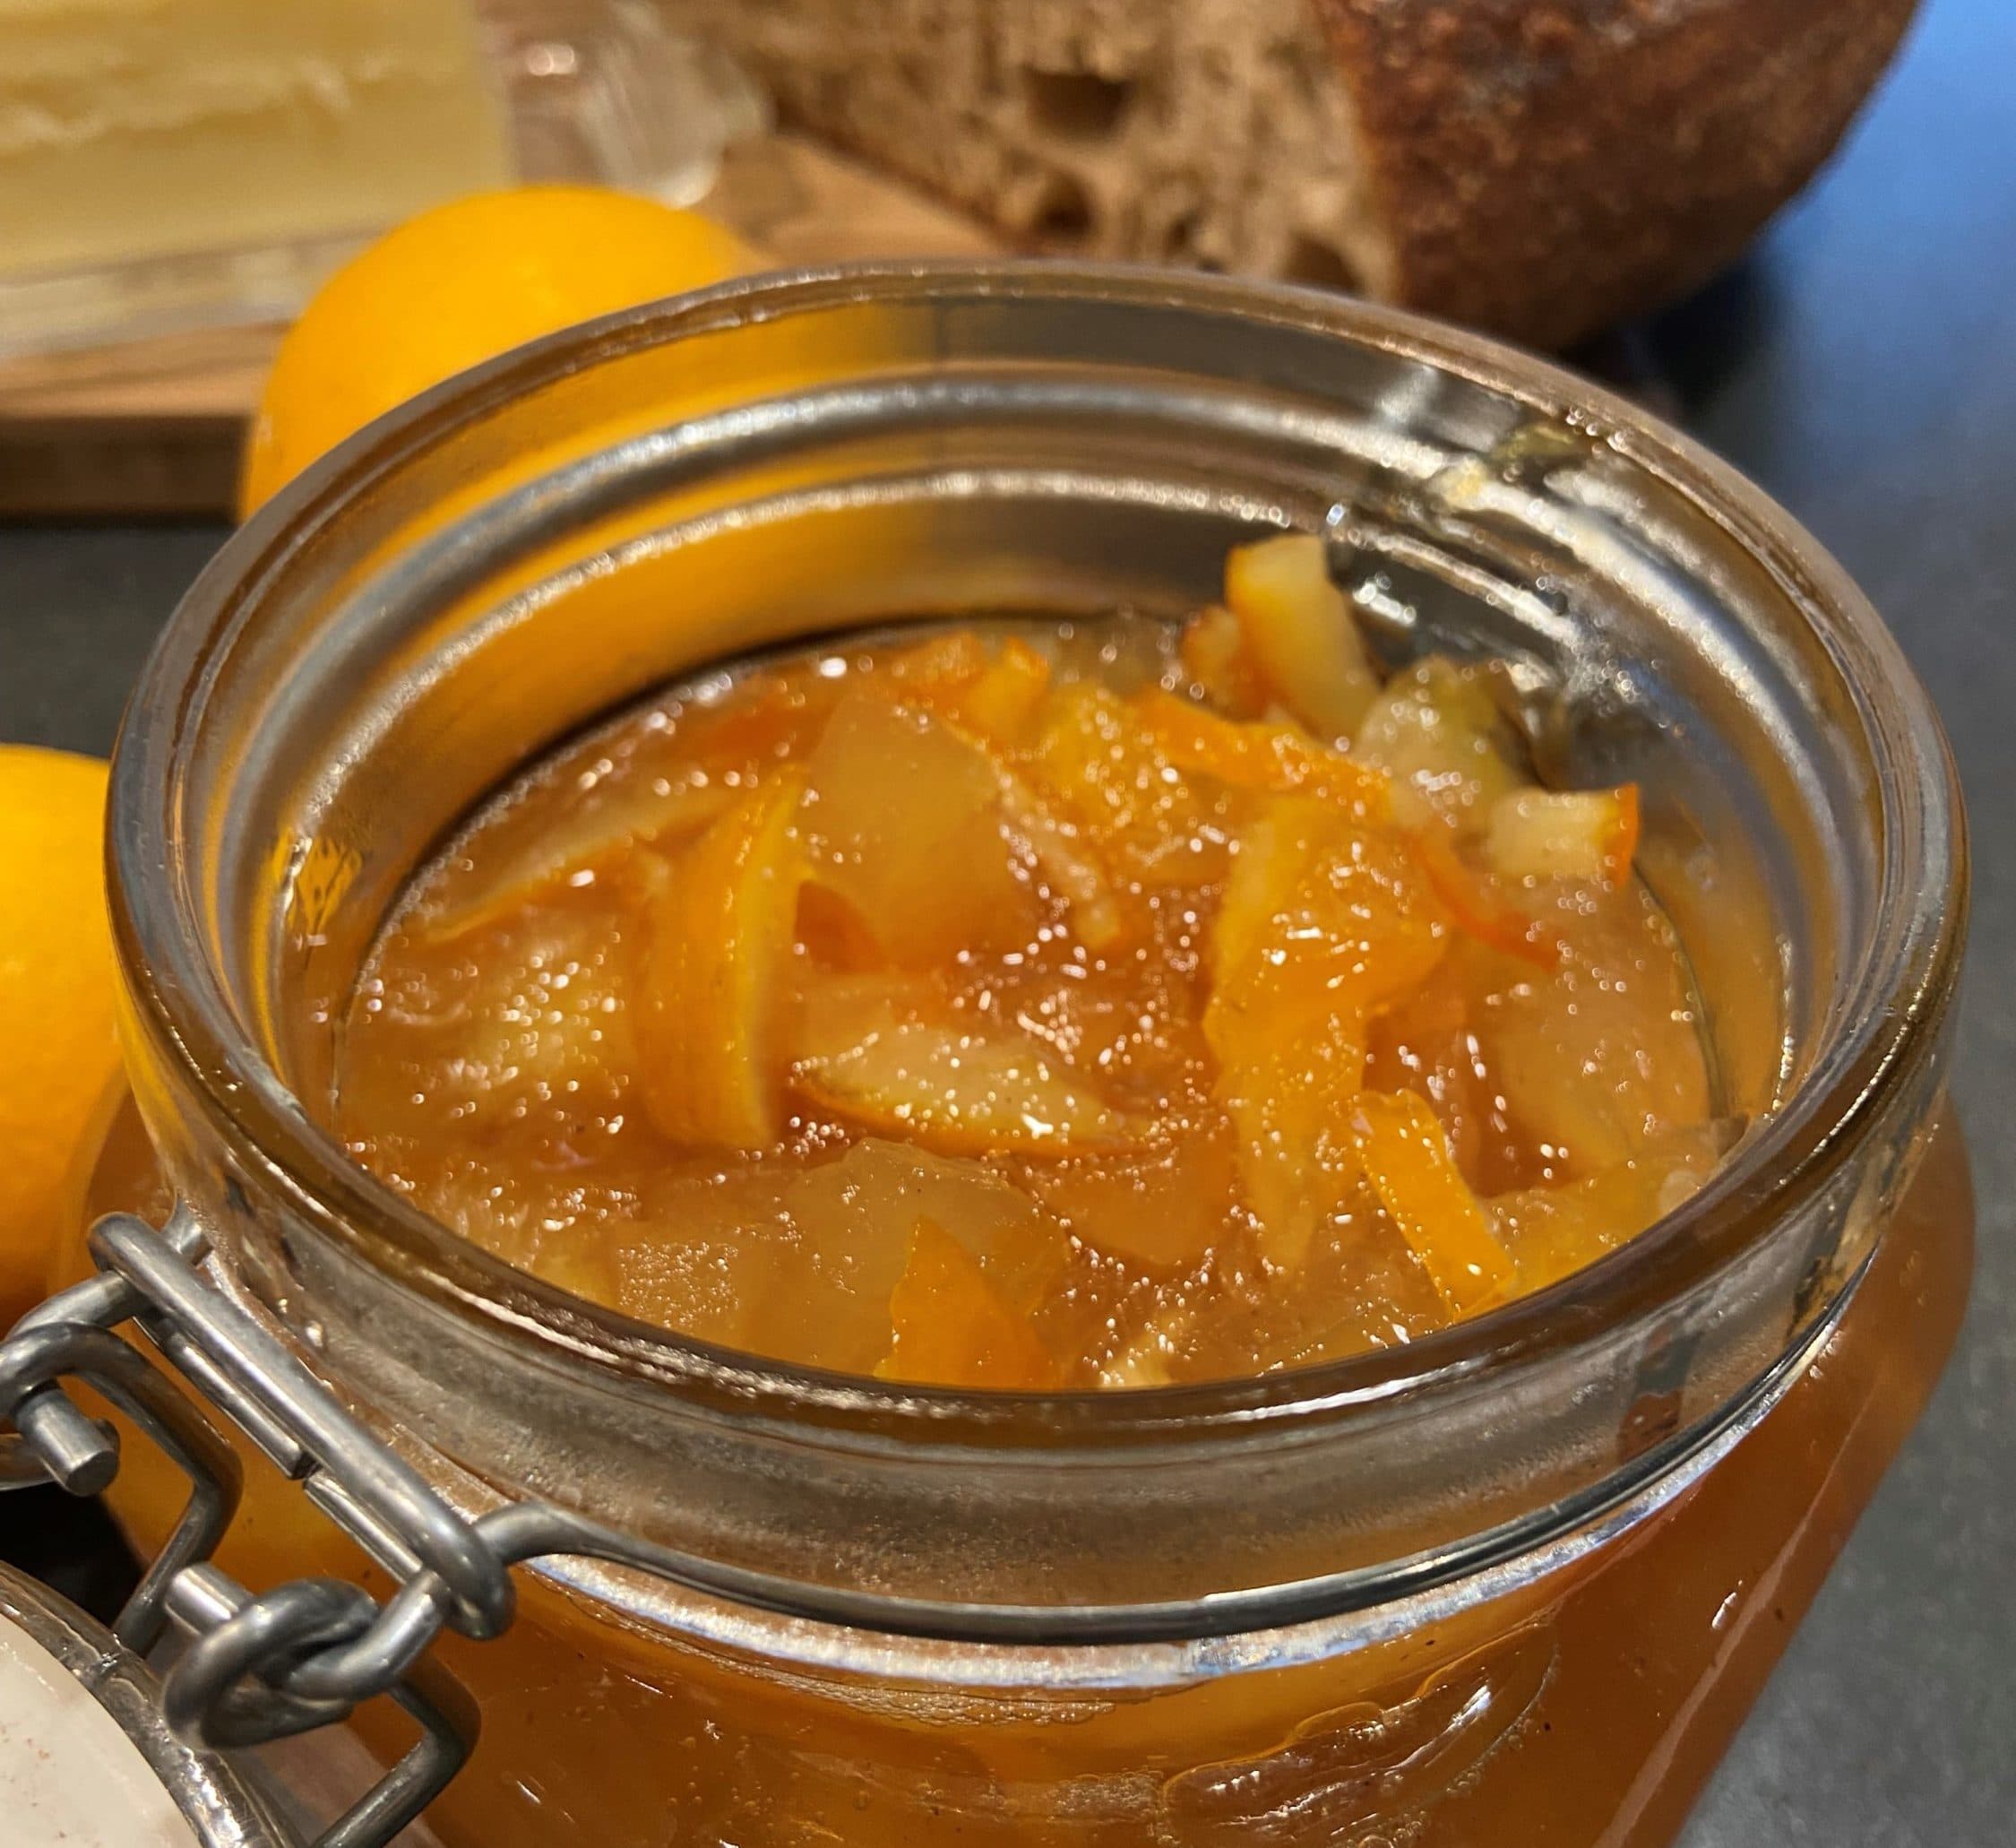 Winter Citrus Marmalade (Kathy Gunst/Here & Now)